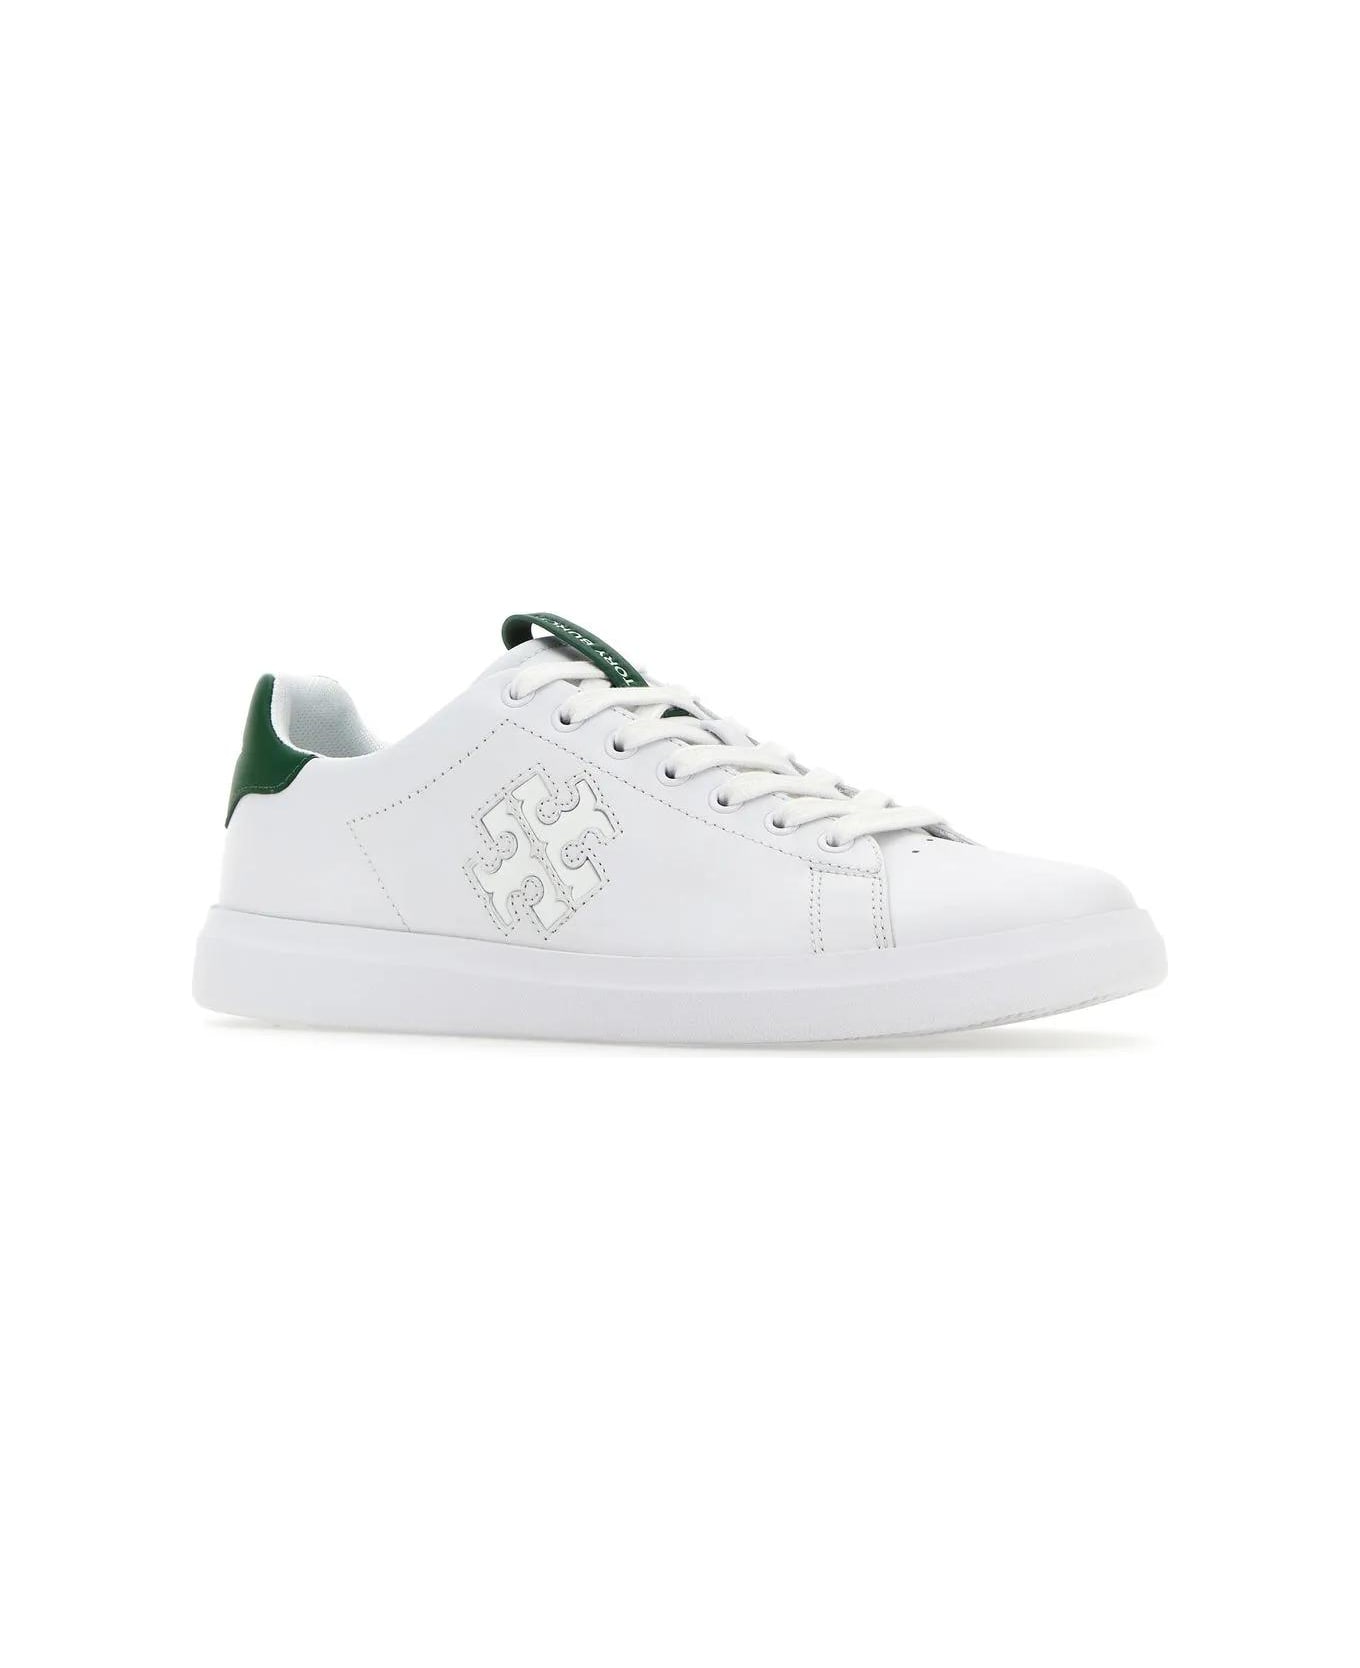 Tory Burch Howell Court Sneakers - WHITE/ARUGULA GREEN